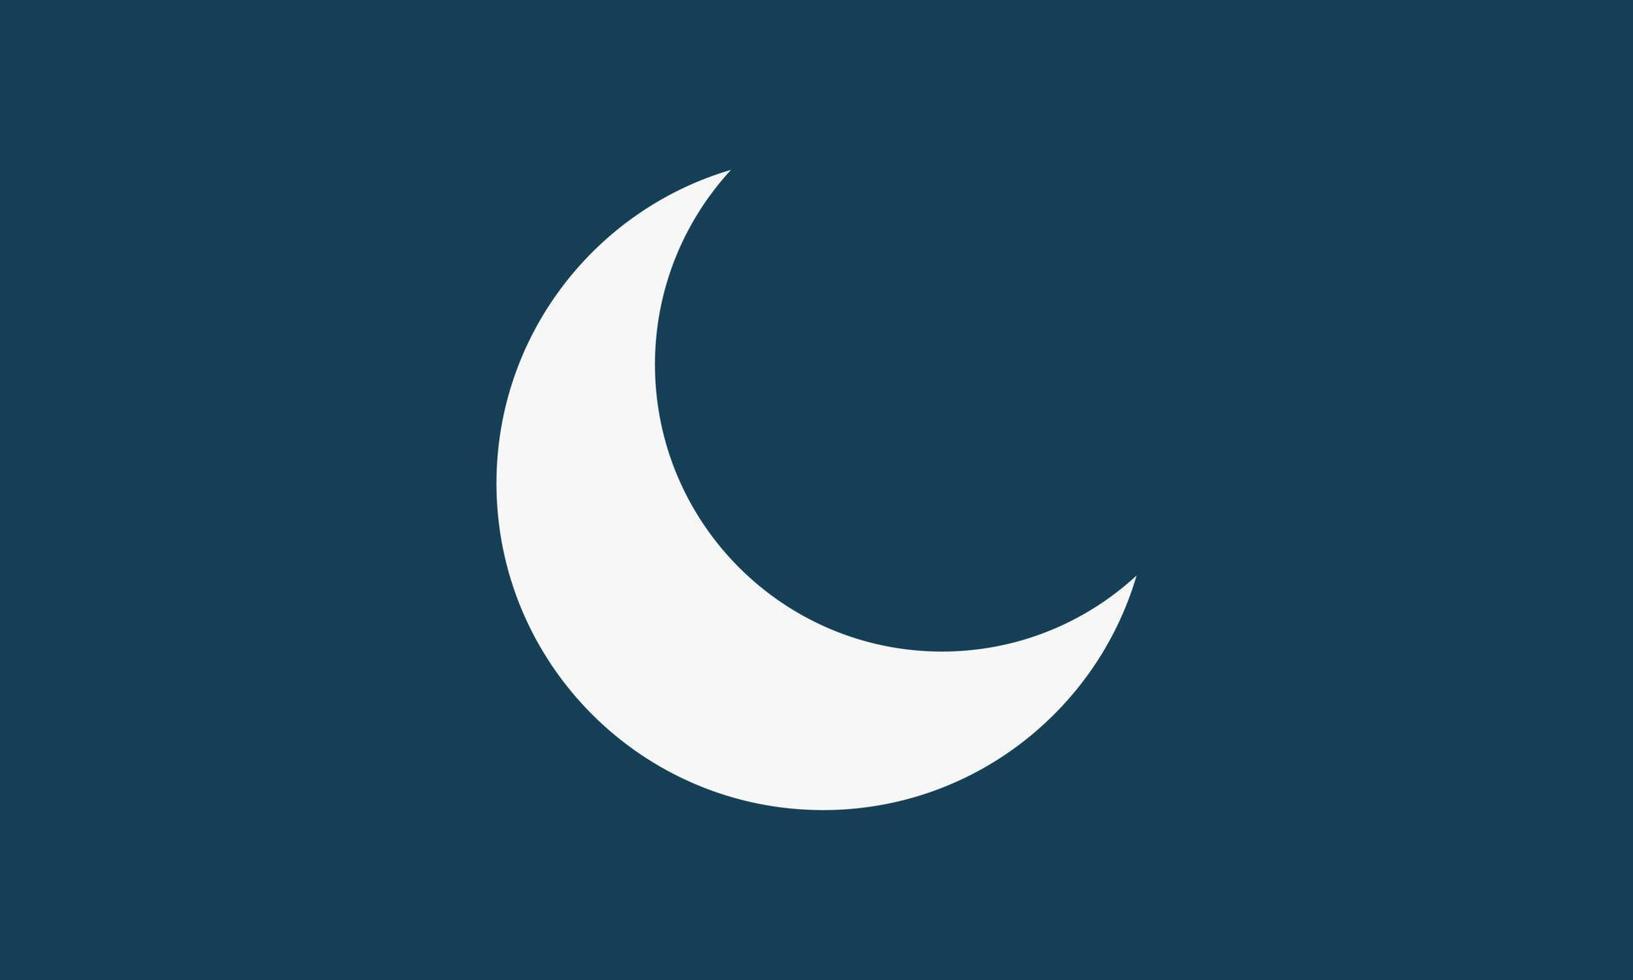 crescent moon on blue background. vector illustration.